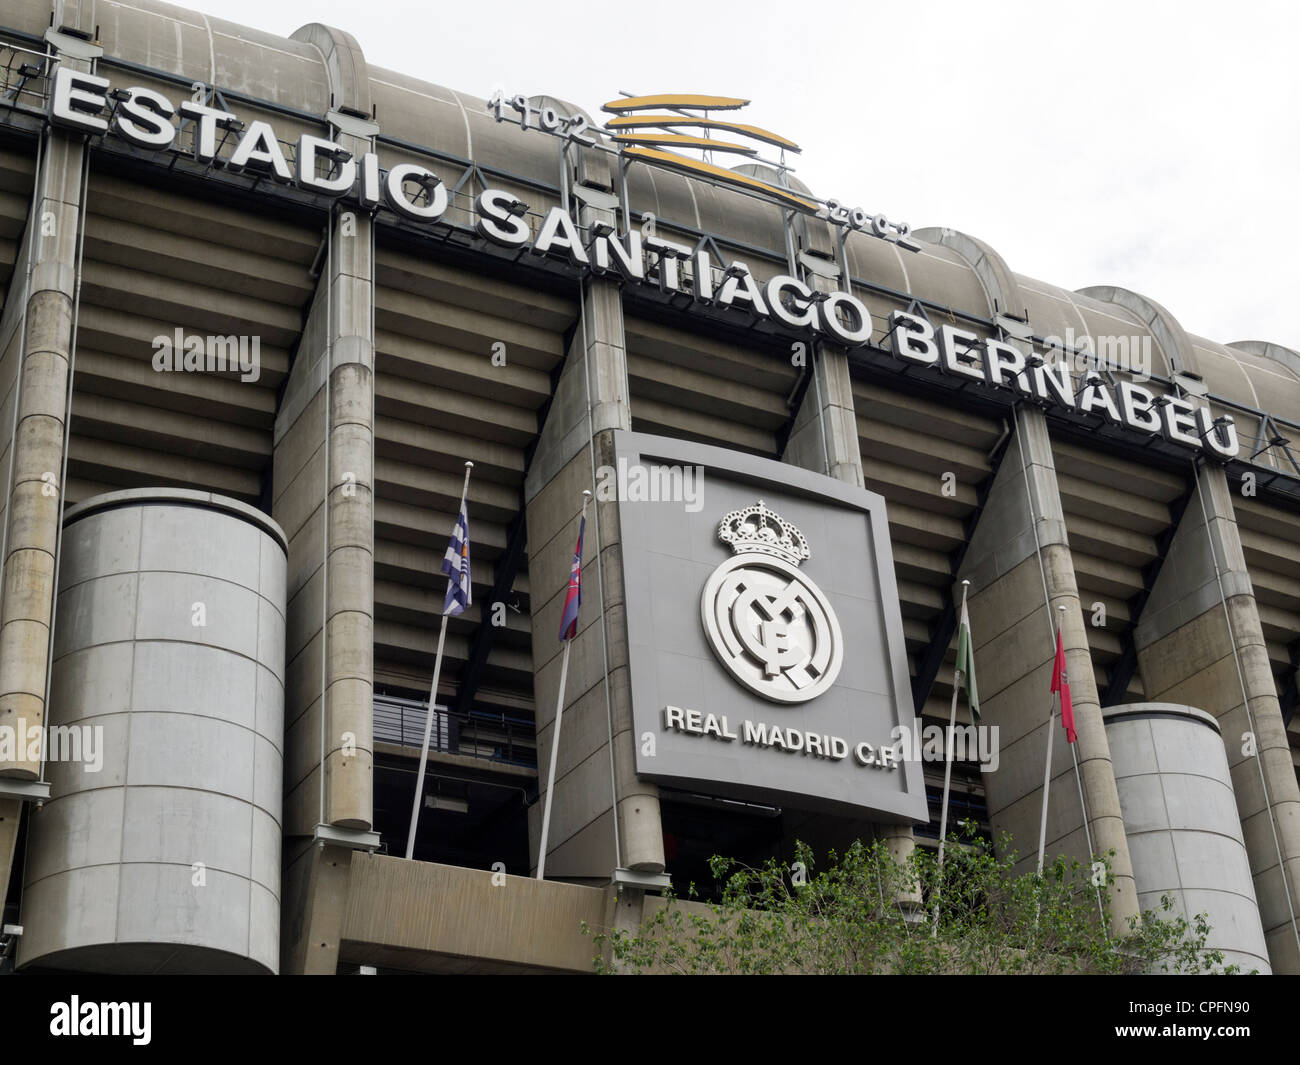 Real Madrid stadium Santiago Bernabéu in Madrid, Spain Stock Photo